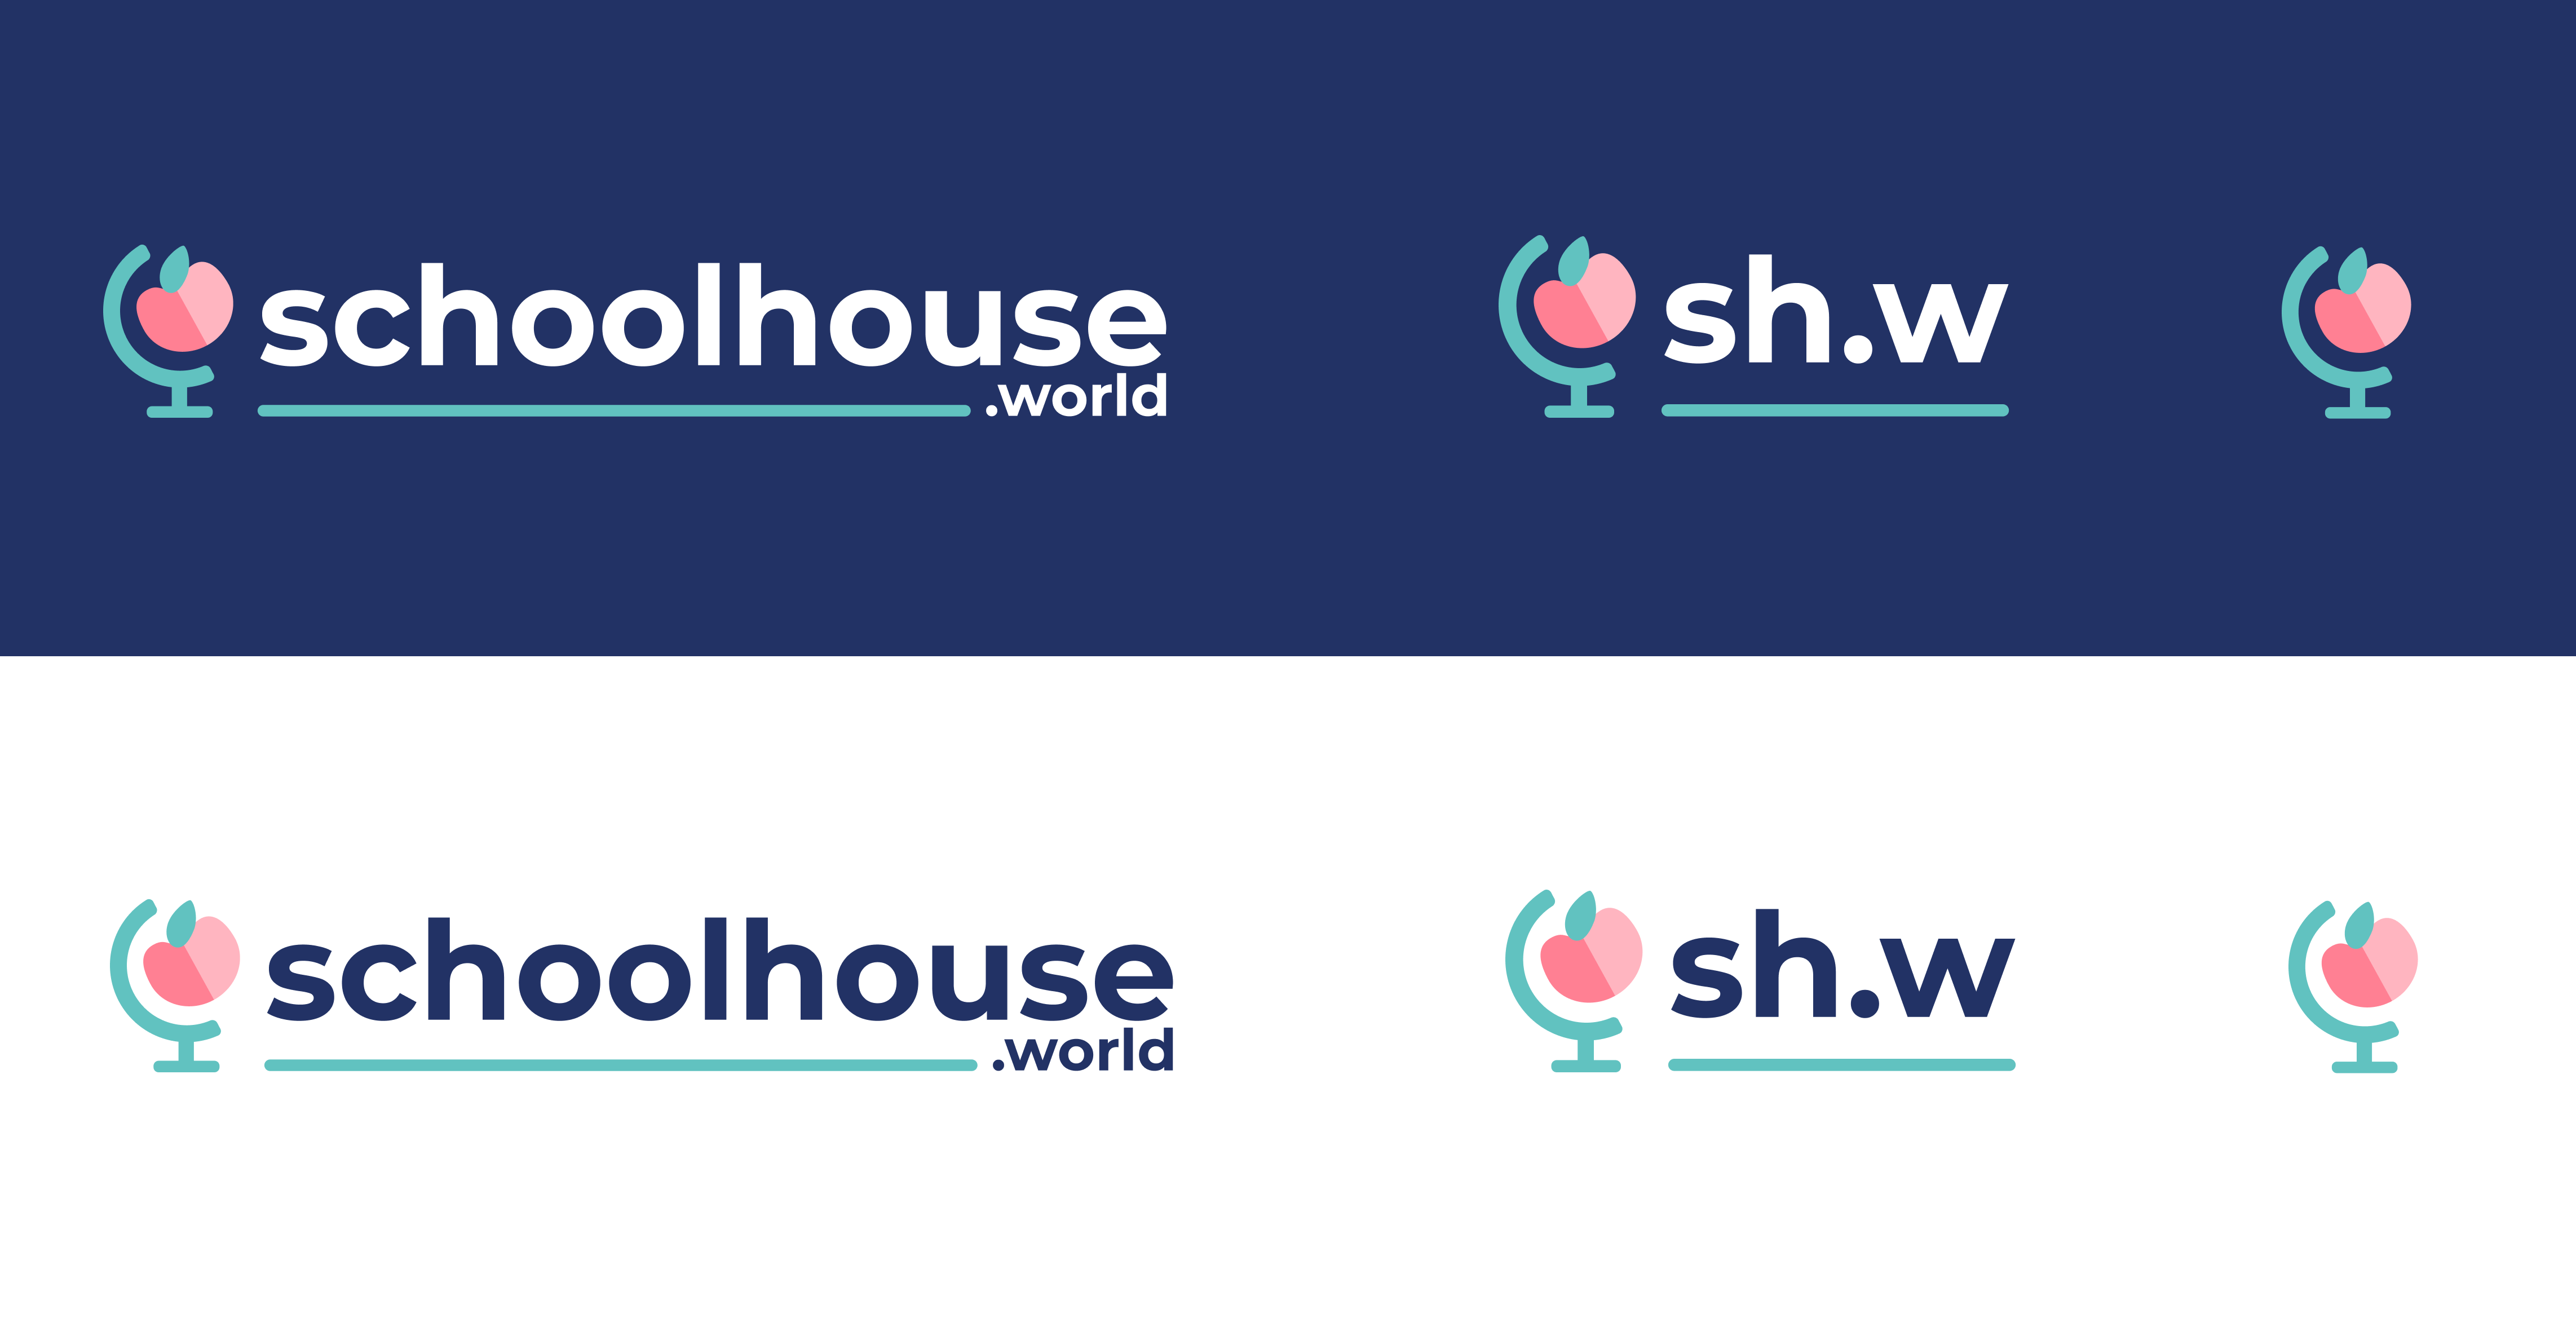 schoolhouse.world logo